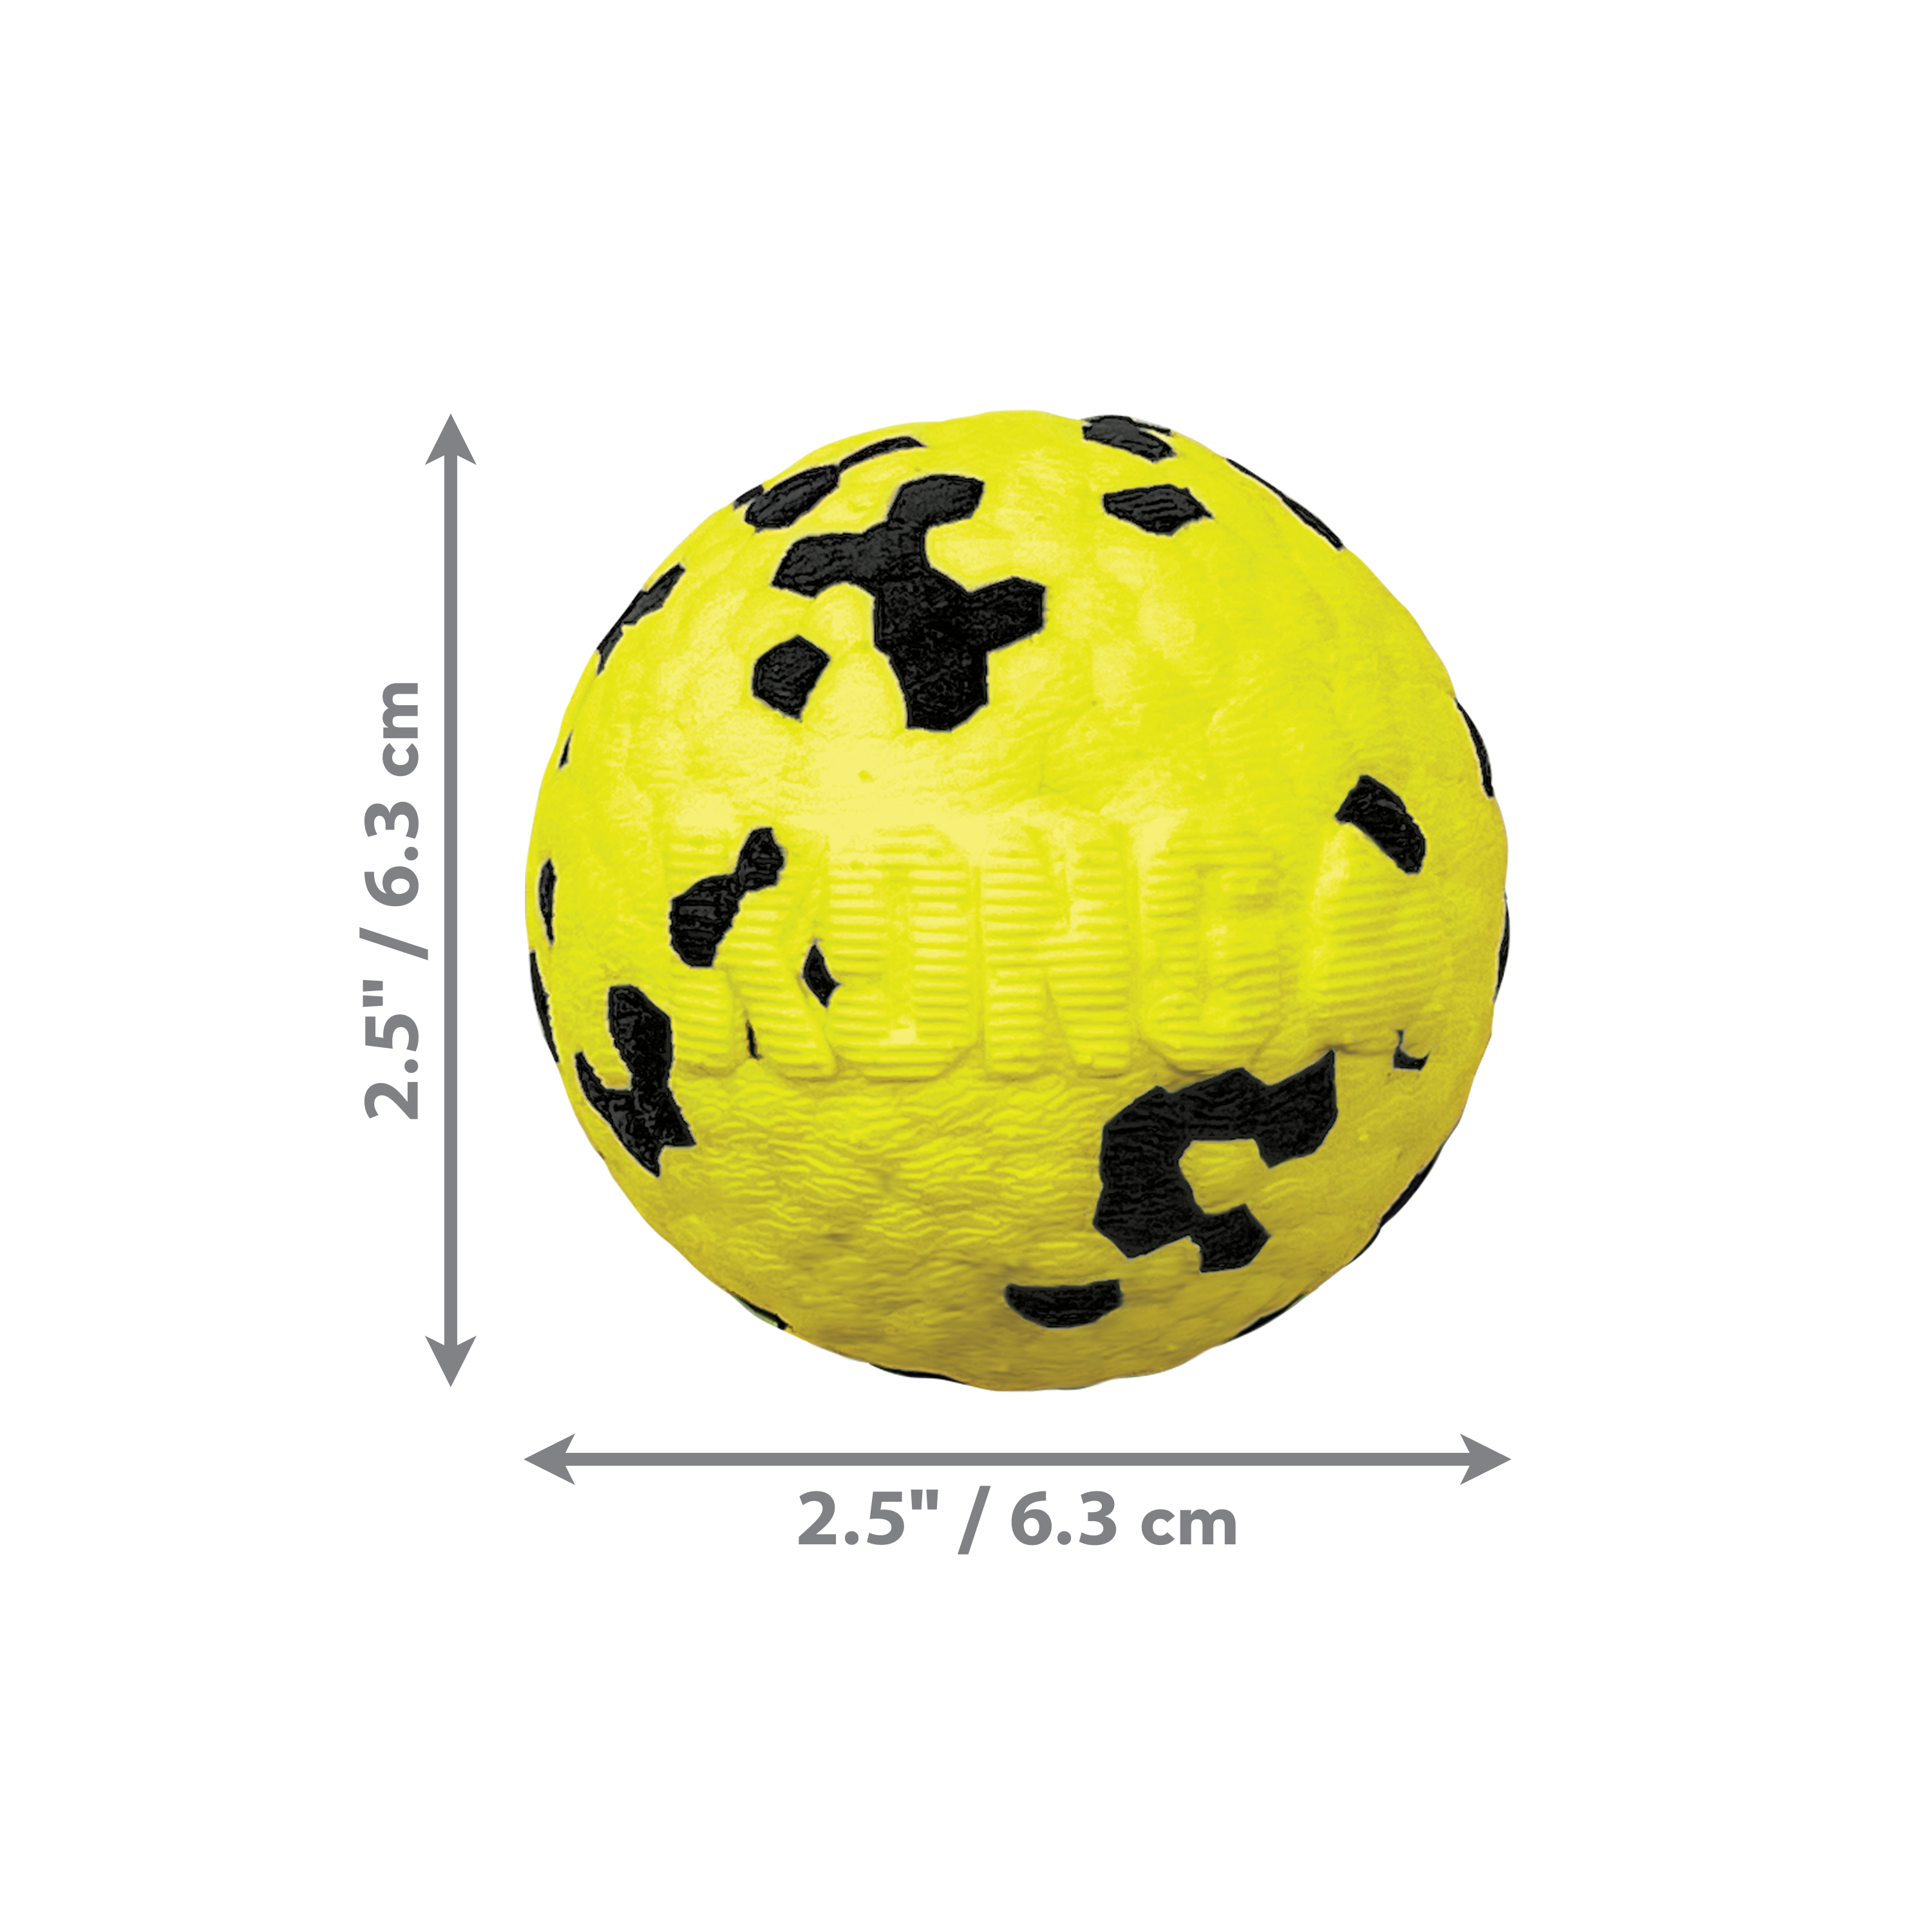 Reflex Ball dimoffpack imagem do produto